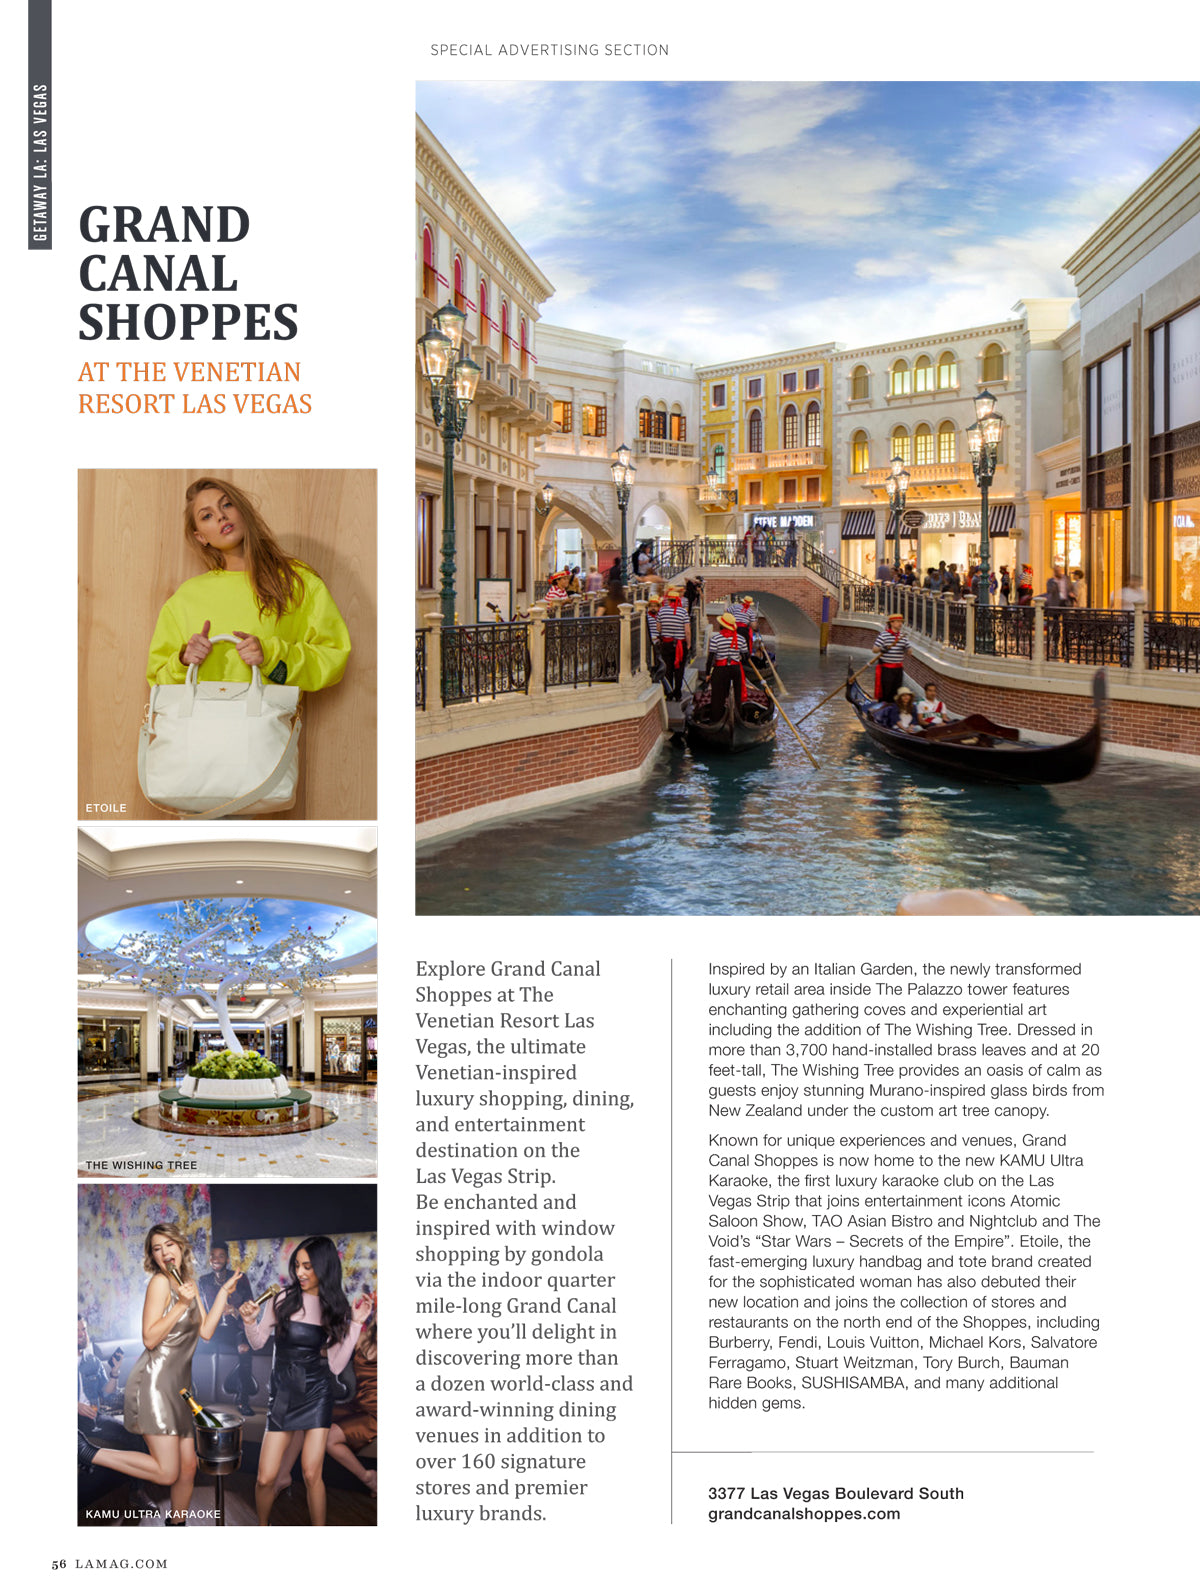 LA Magazine -Grand Canal Shoppes features etoile